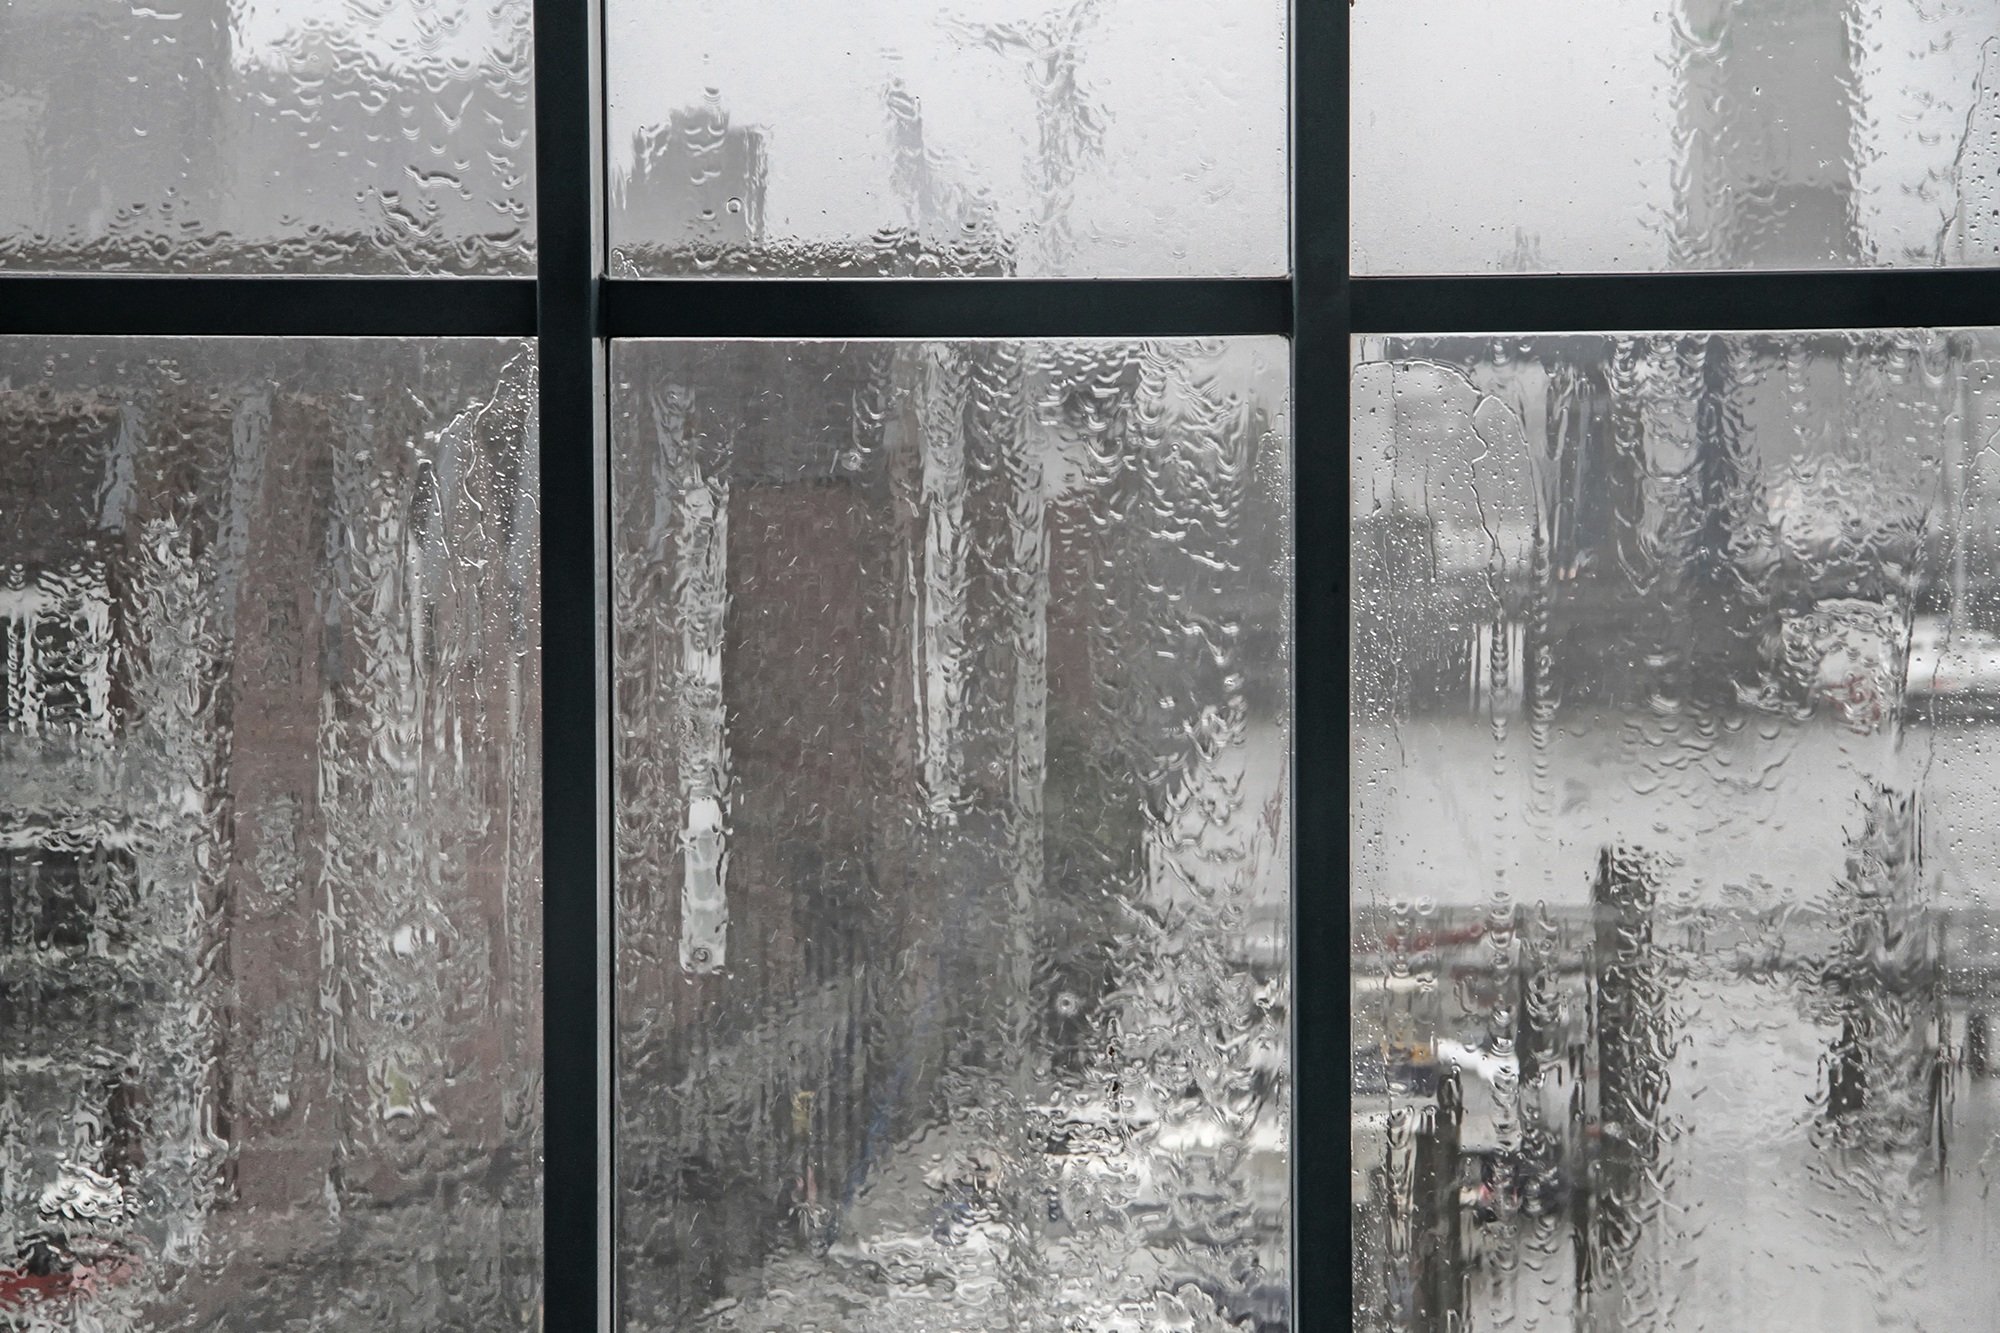 Ilgiz за окном дождь. Зимнее окно. Вид из окна дождь. Дождь в окне. Серый вид из окна.